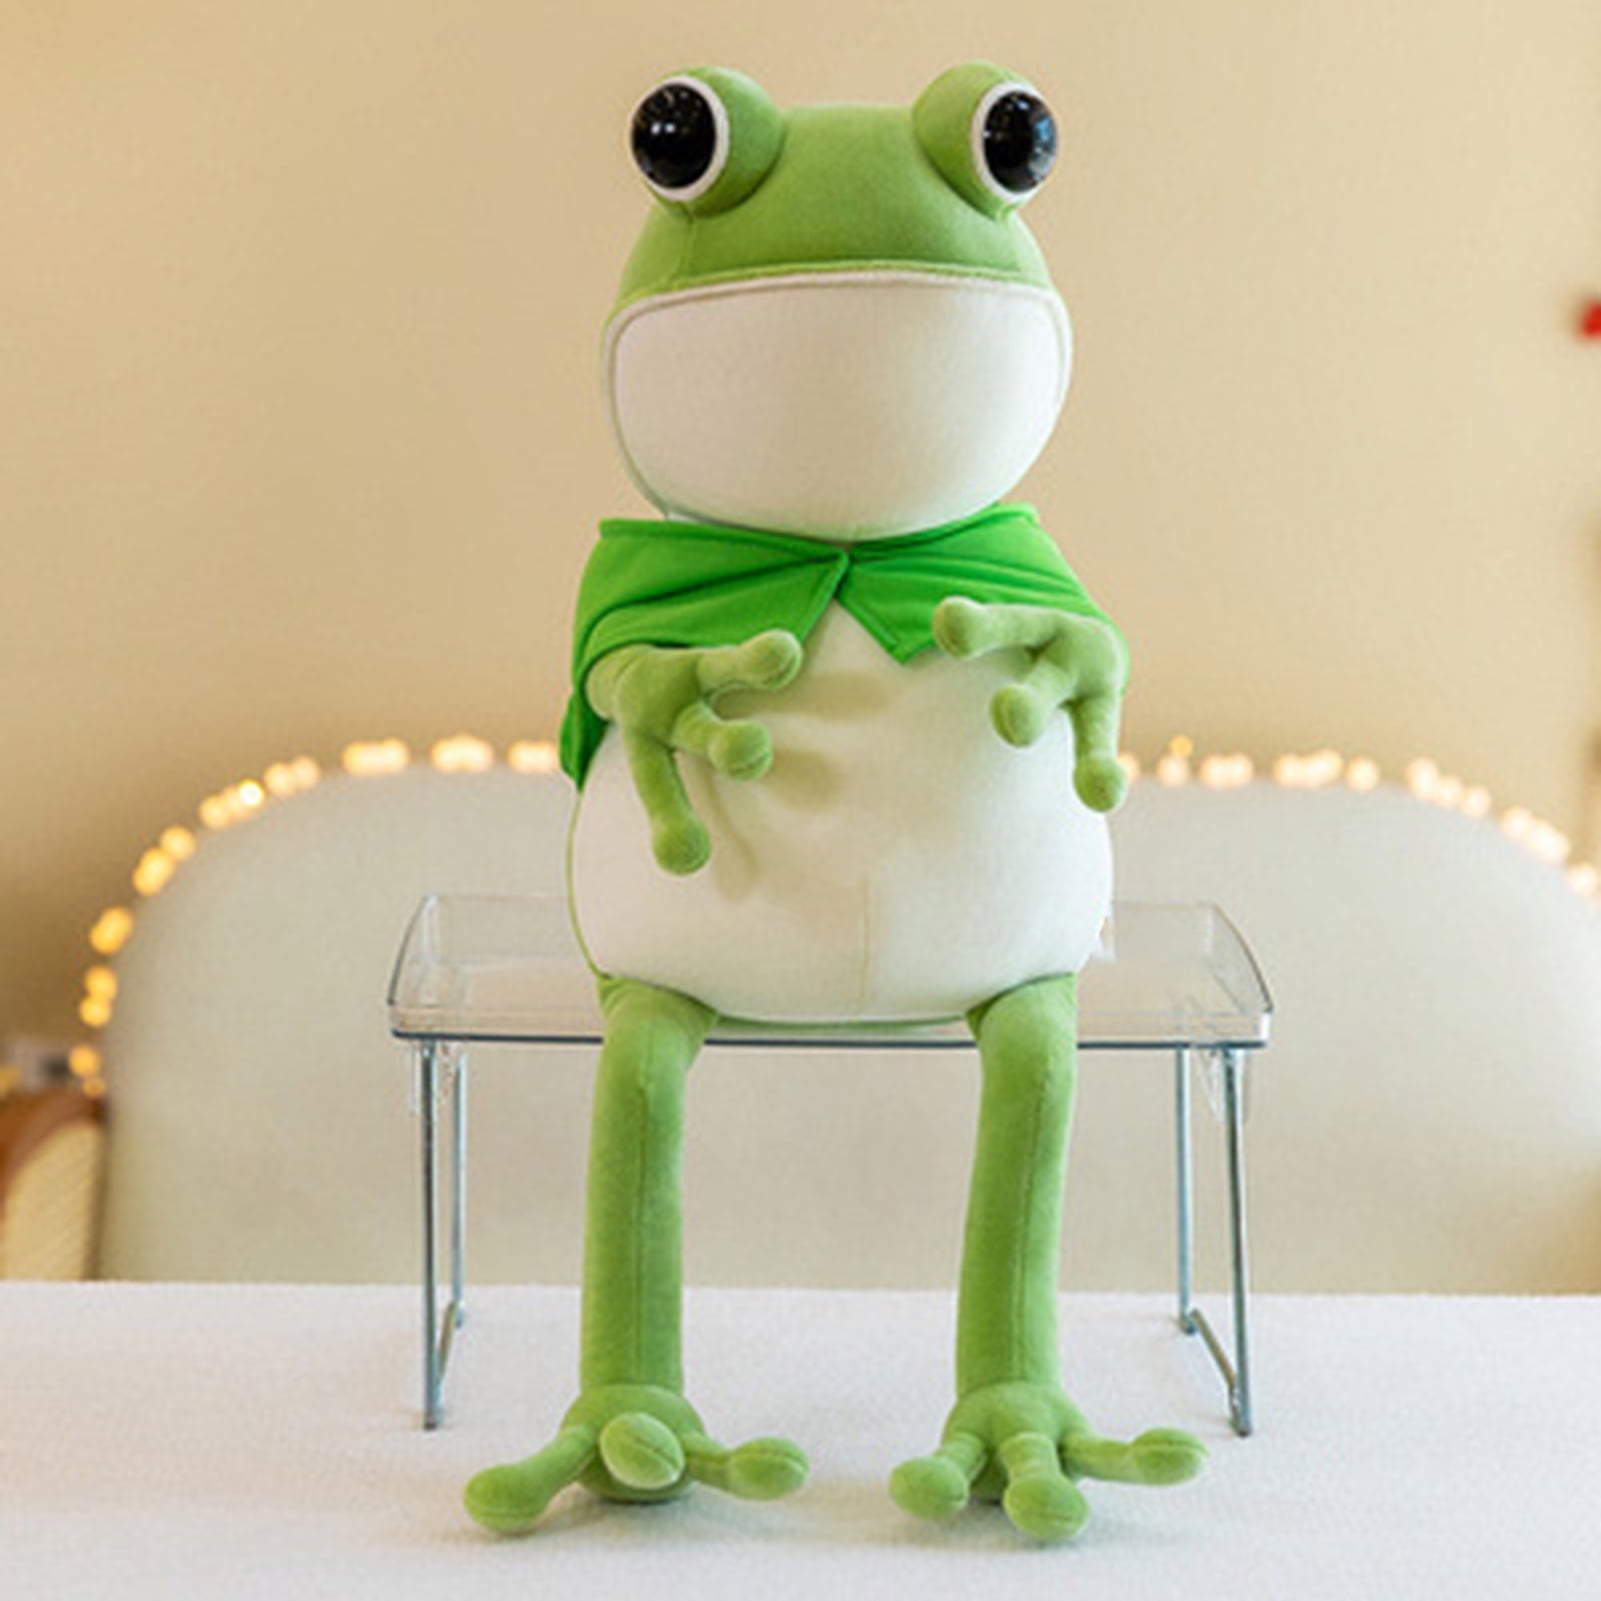 Kawaii Frog Plush toy Big Eyes Frog Soft Stuffed Animal Smile Green Frog  Plushie Figure Doll Kids Comfort Appease Toy Room Decor